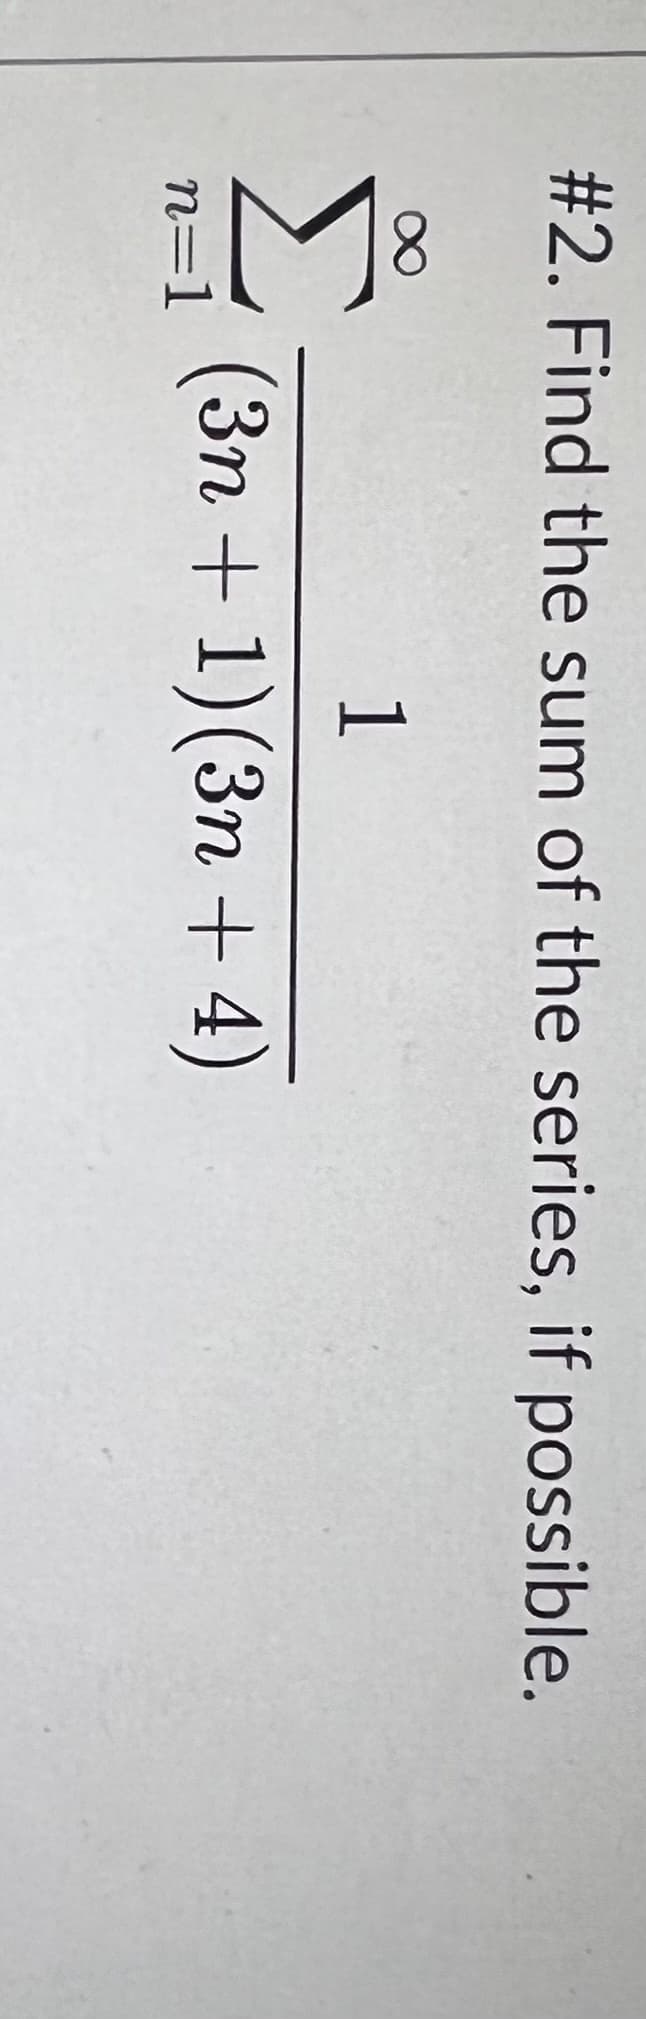 #2. Find the sum of the series, if possible.
1
(3n+ 1)(3n+4)
8
n=1